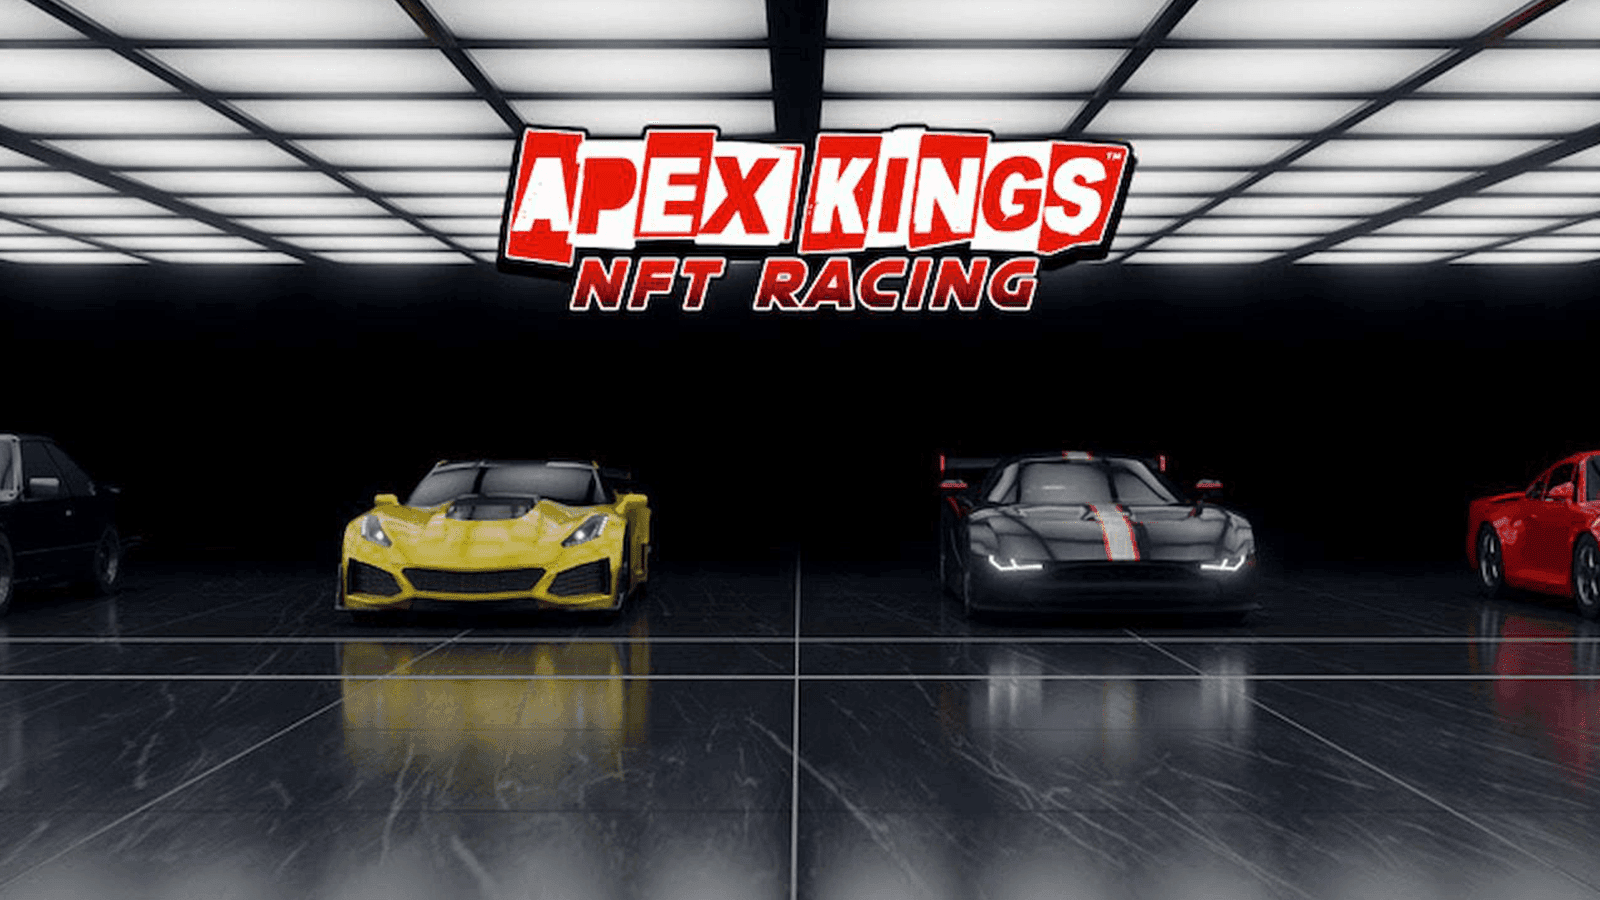 Apex Kings NFT Racing - Game Review